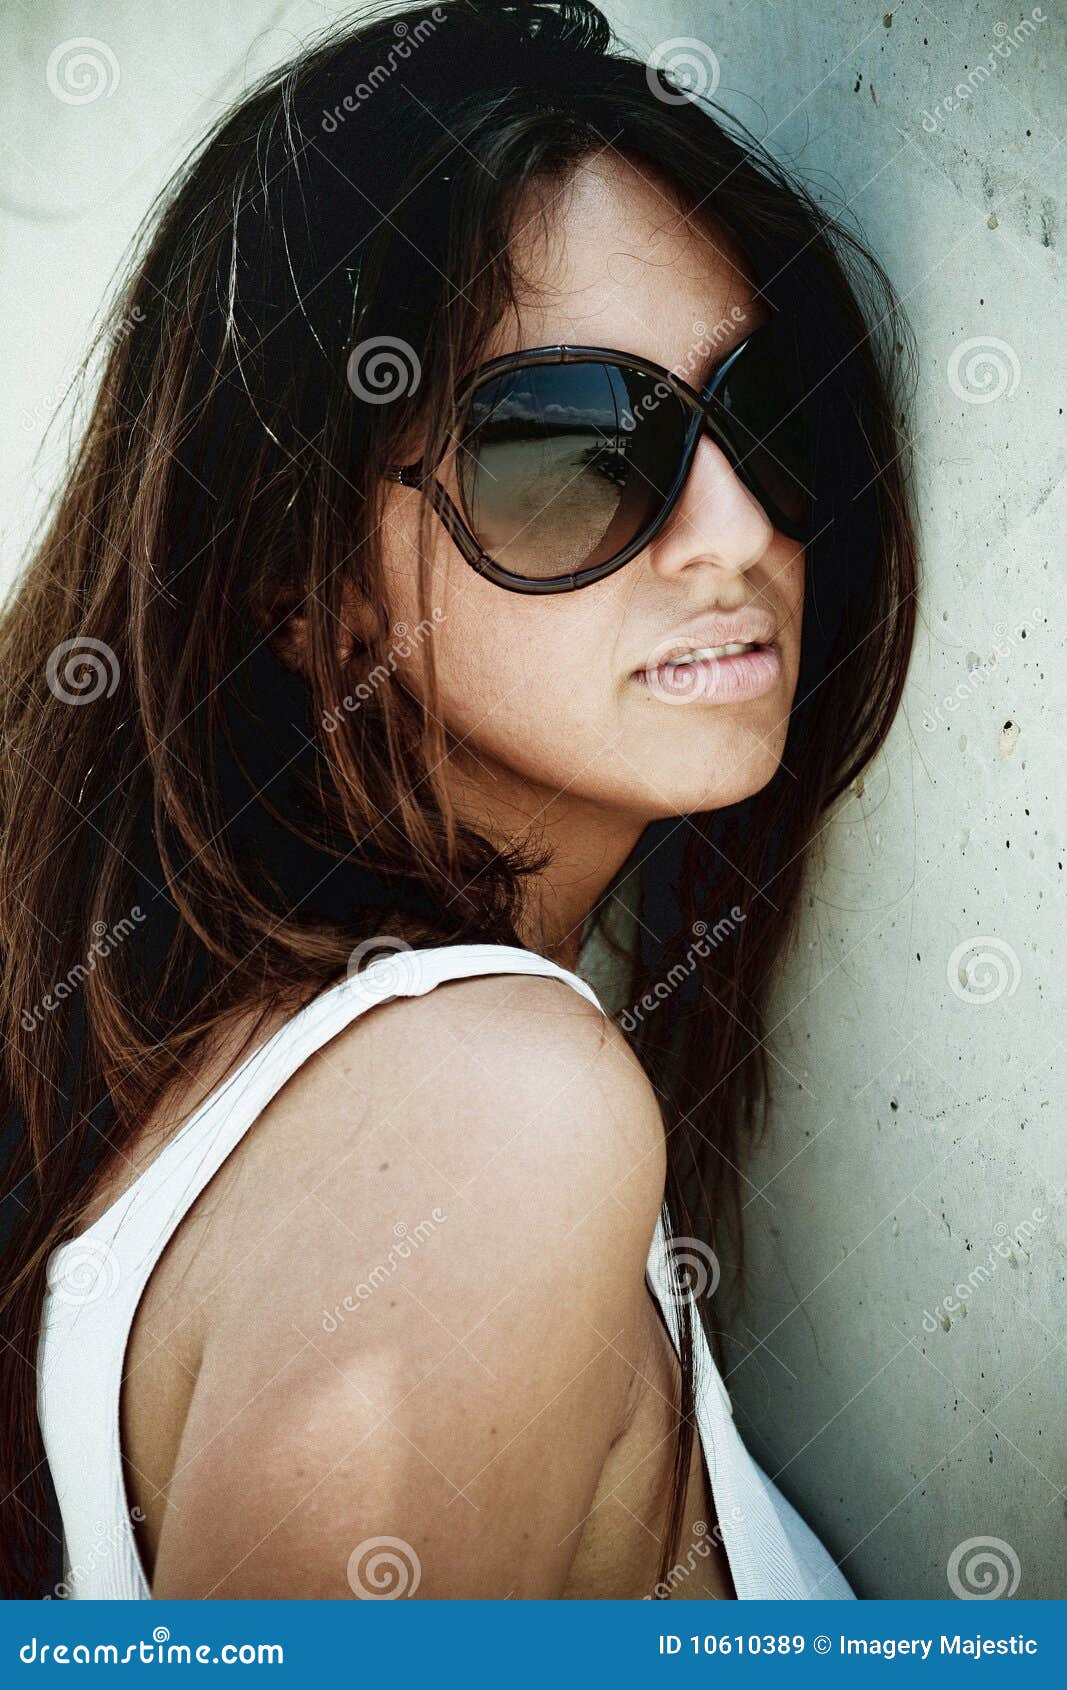 Latin Girl In Stylish Glasses Royalty Free Stock Images Image 10610389